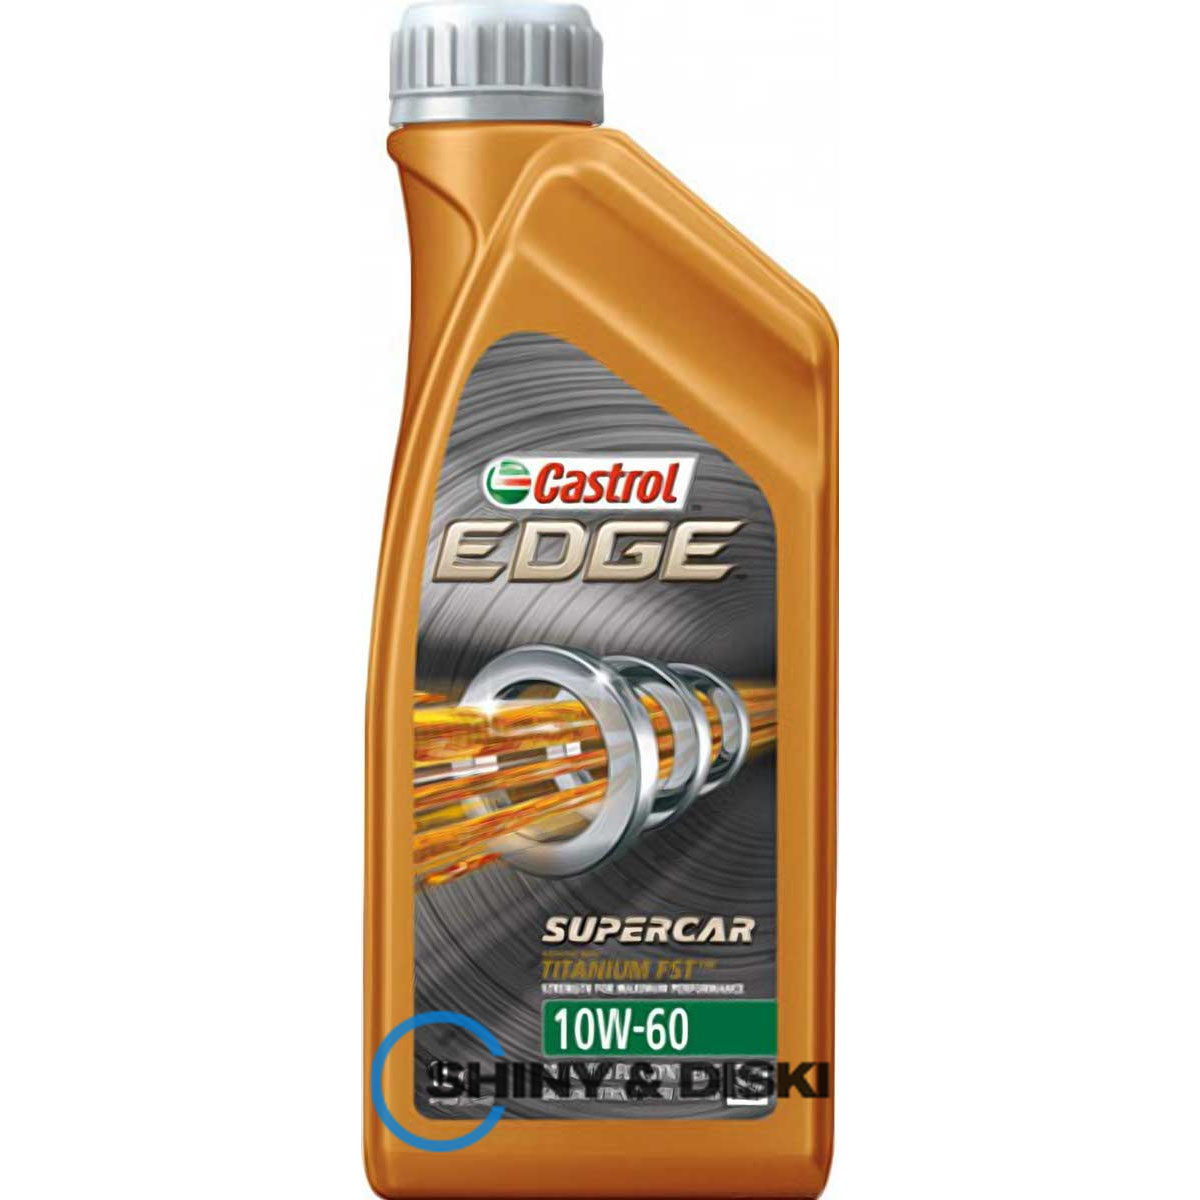 castrol edge supercar 10w-60 (1л)